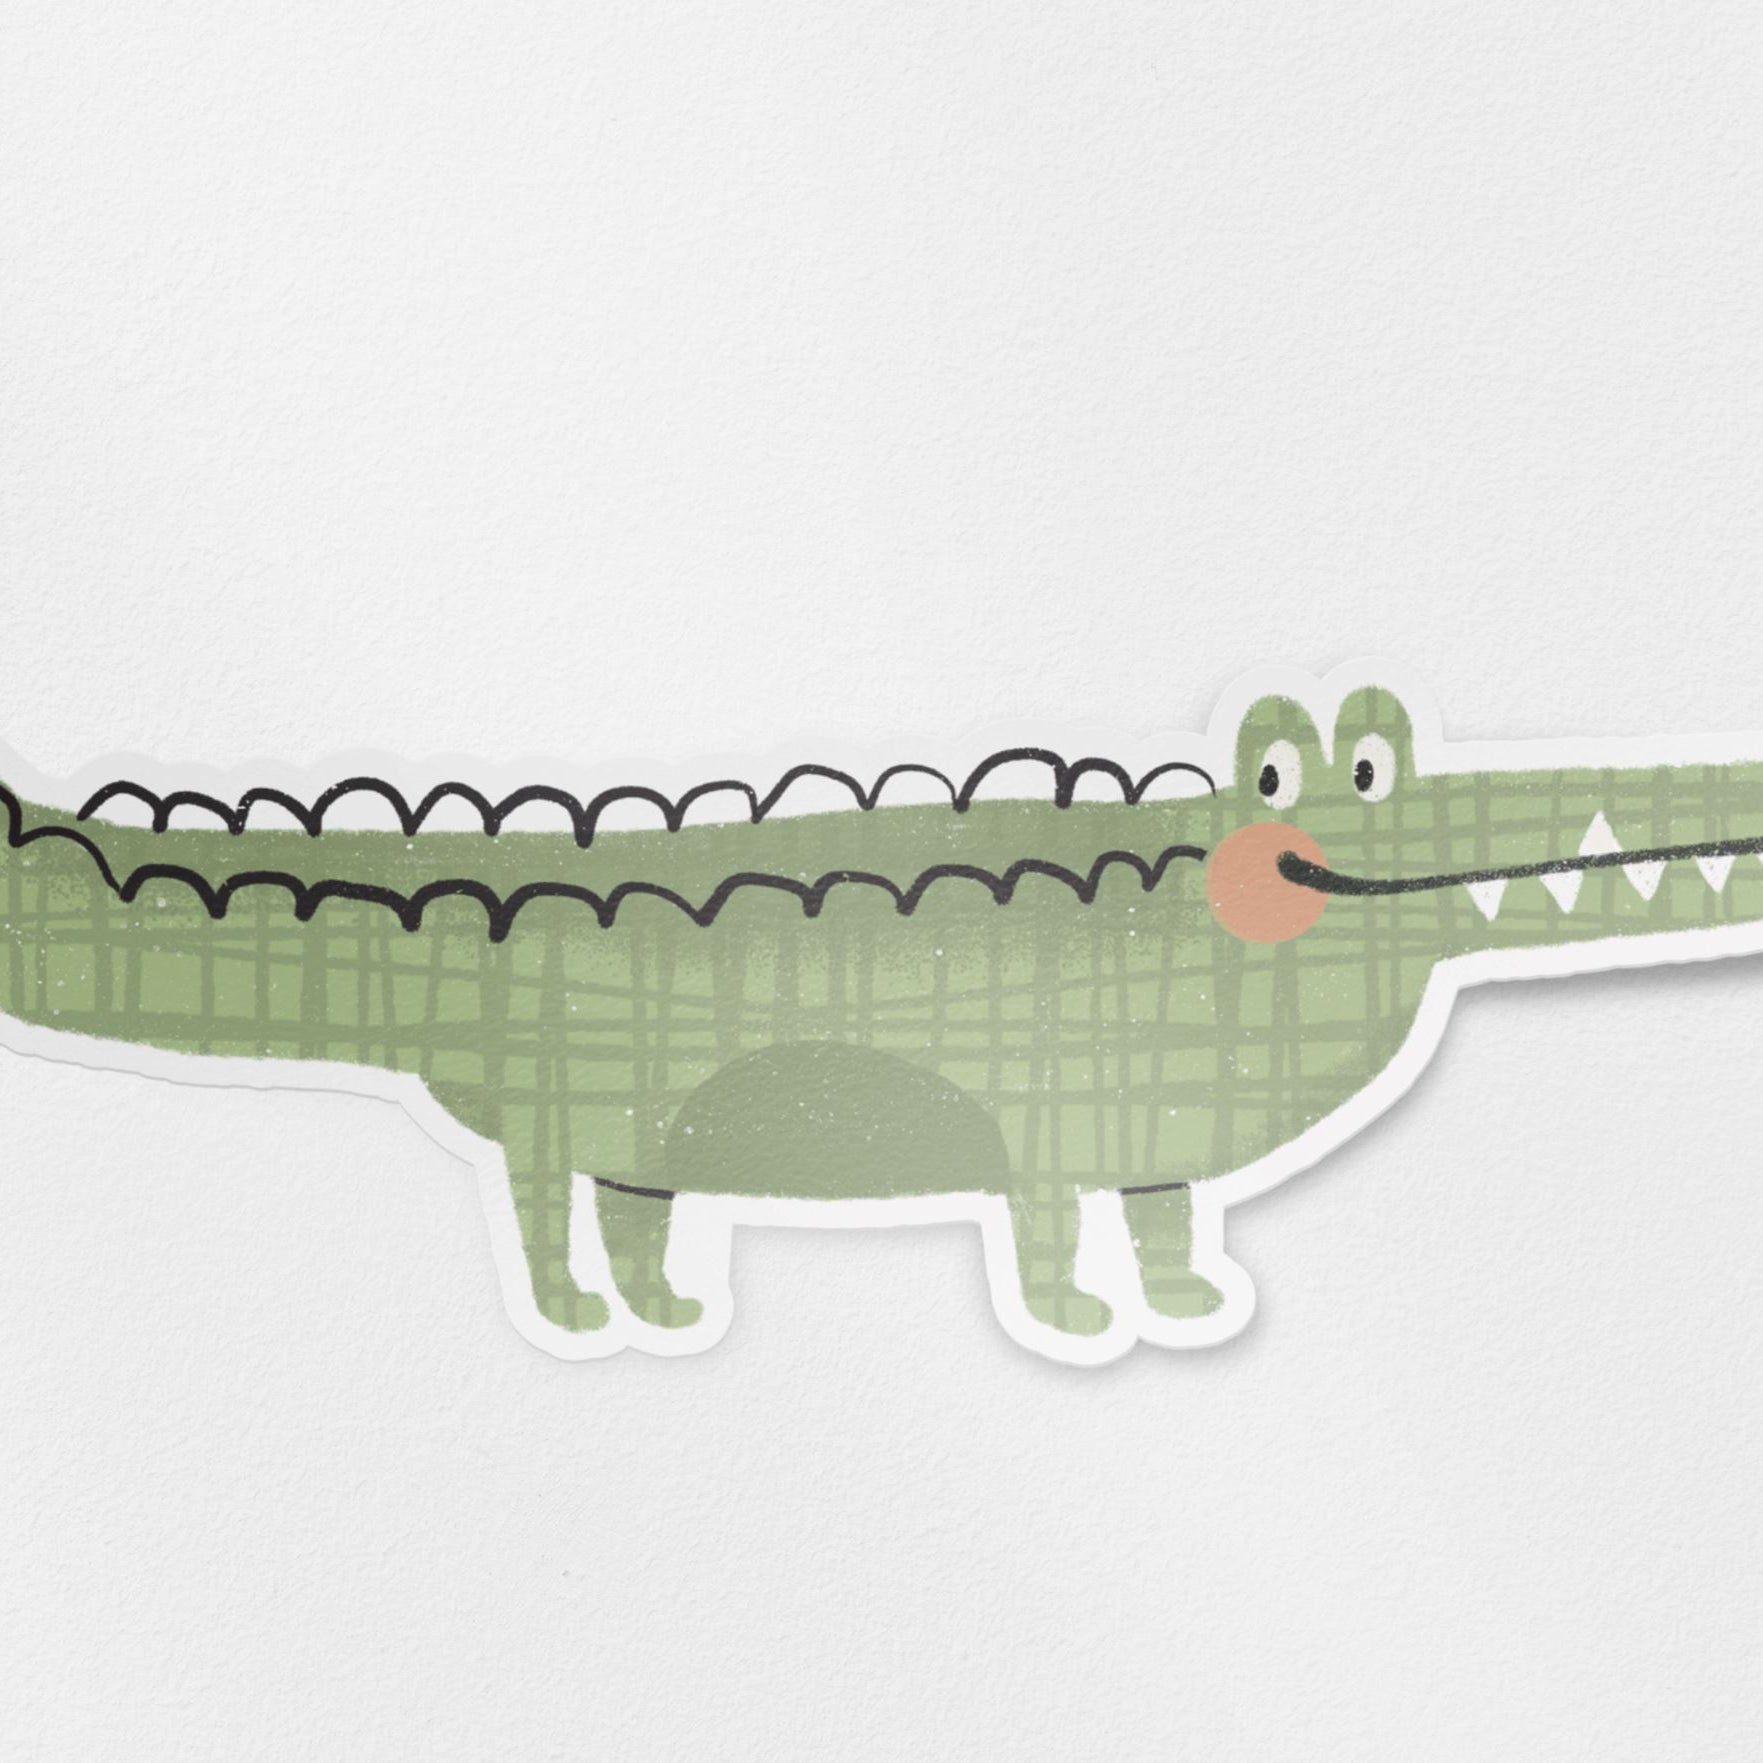 A glossy vinyl die cut sticker with a hand drawn illustration of a cute green crocodile.